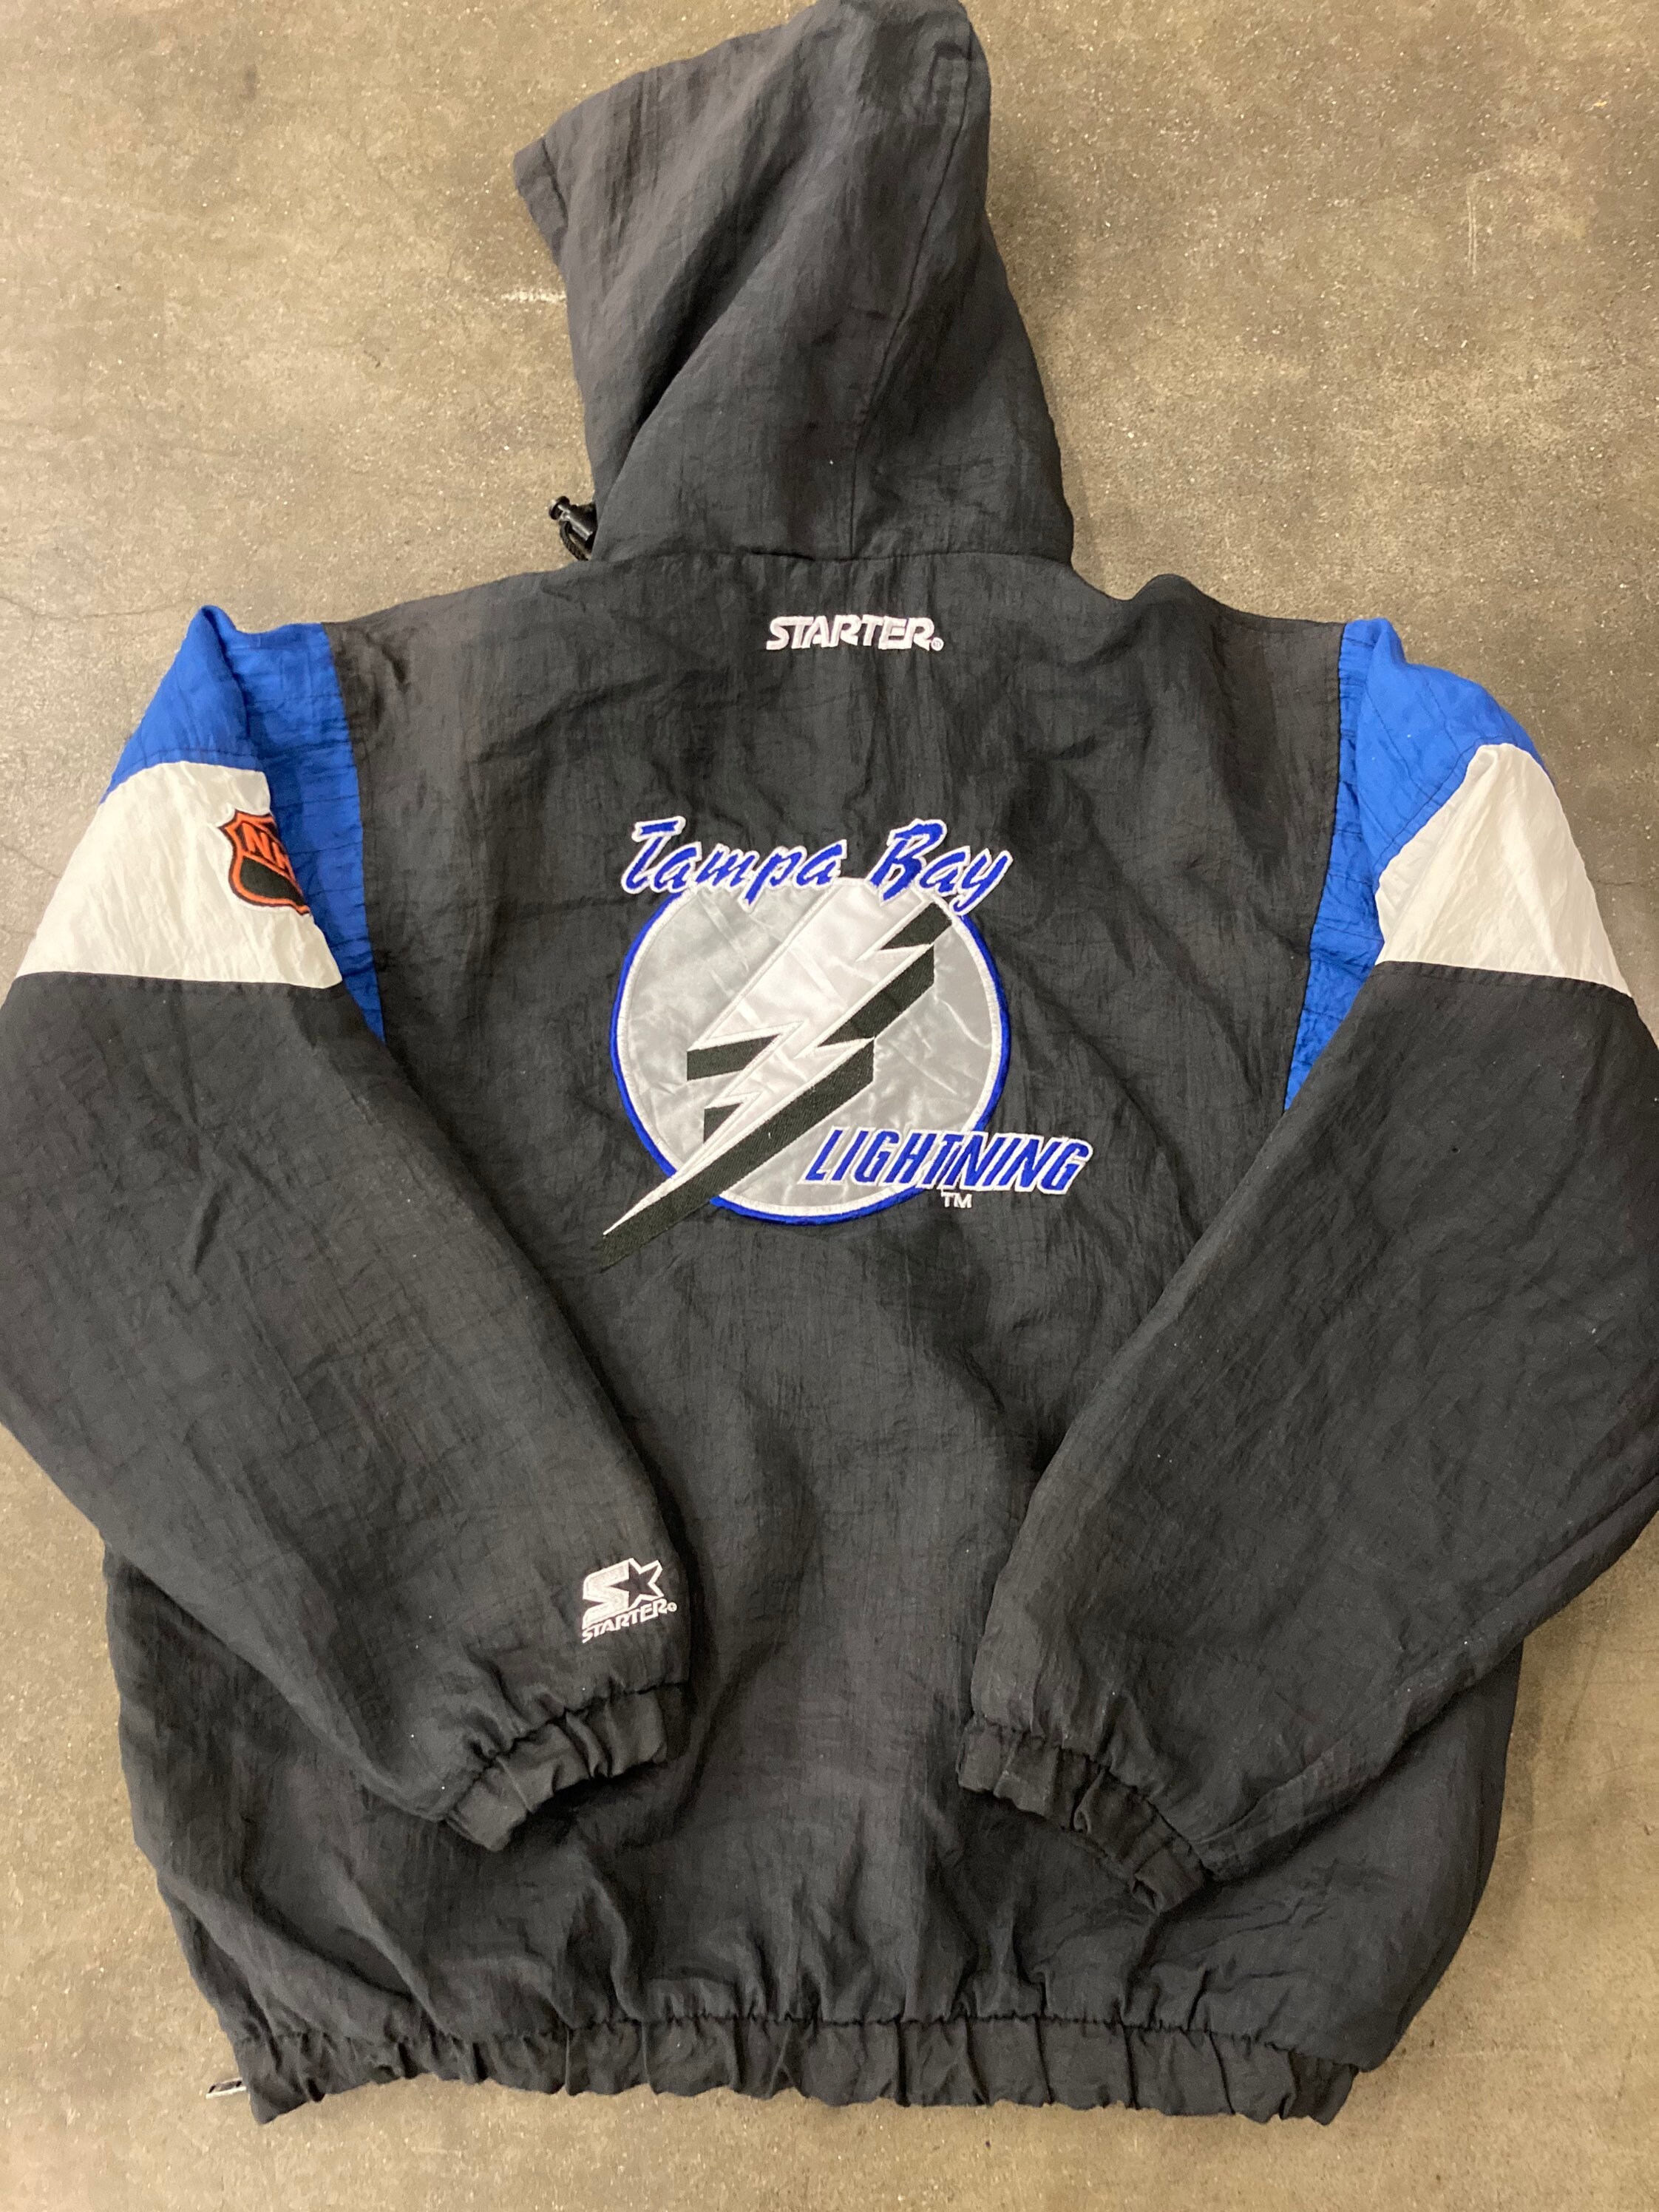 NHL Tampa Bay Lightning Women's Fleece Hooded Sweatshirt - S